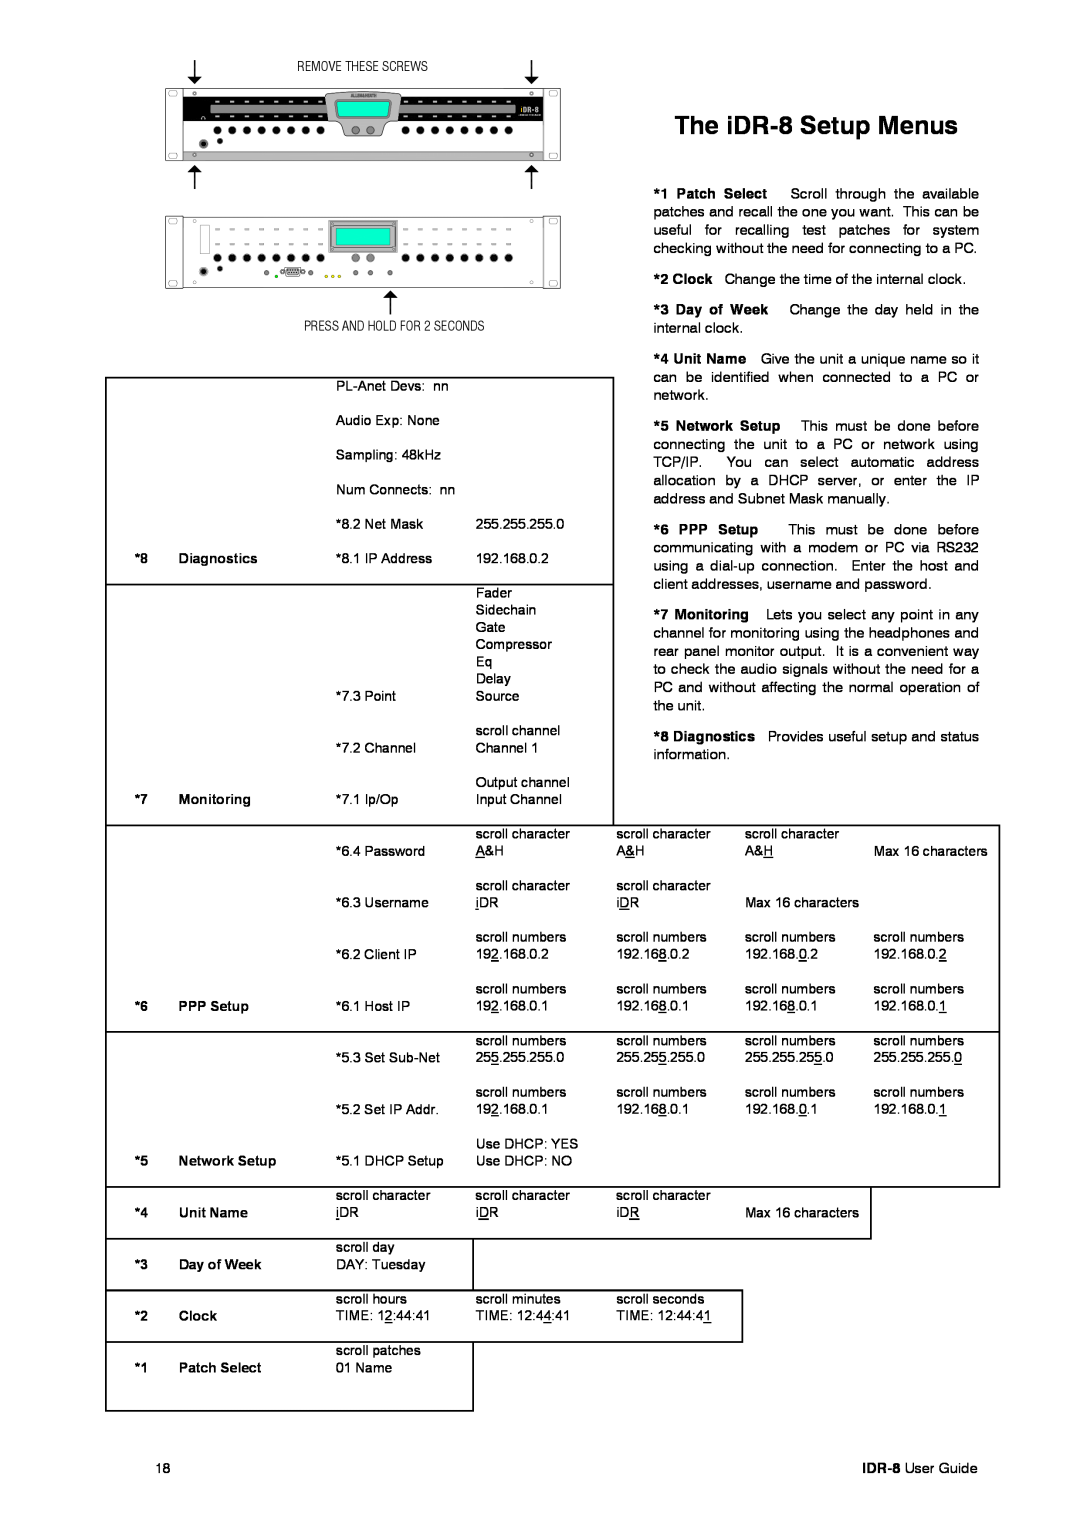 Compex Systems AP4530 manual The iDR-8 Setup Menus, PPP Setup 